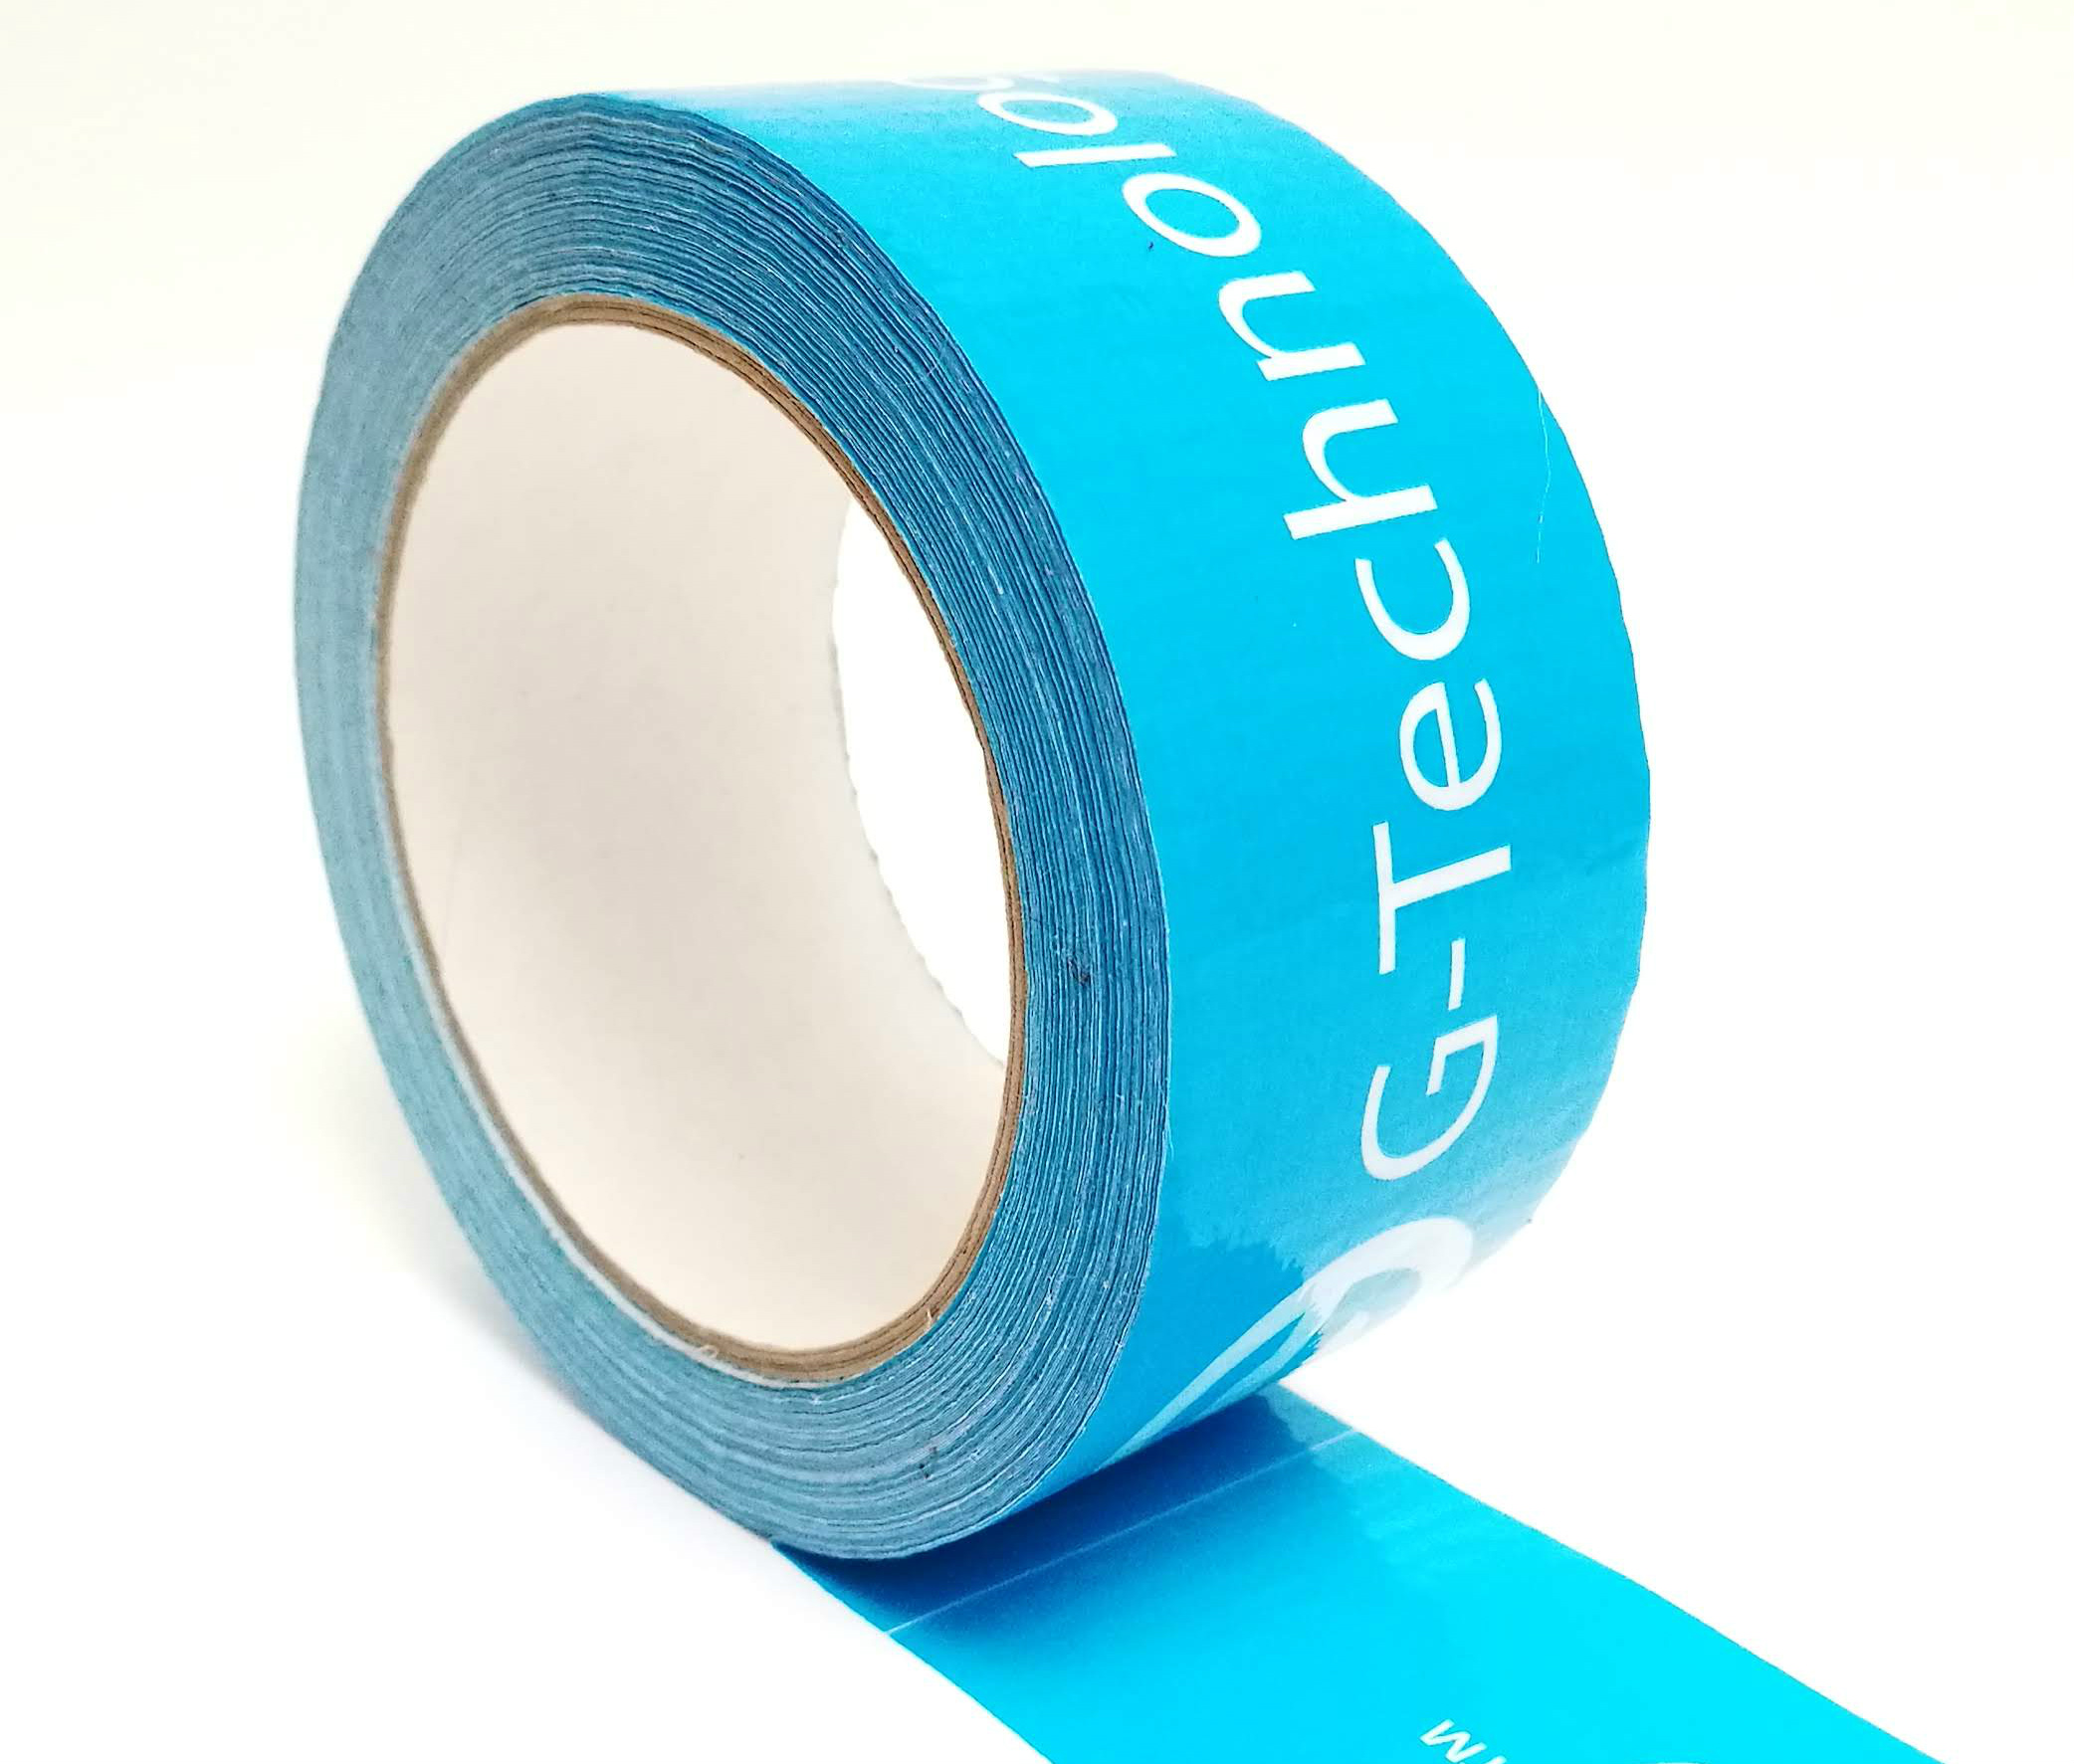 Neu - Bedrucktes Textilklebeband genannt Duct-tape oder auch Ducktape